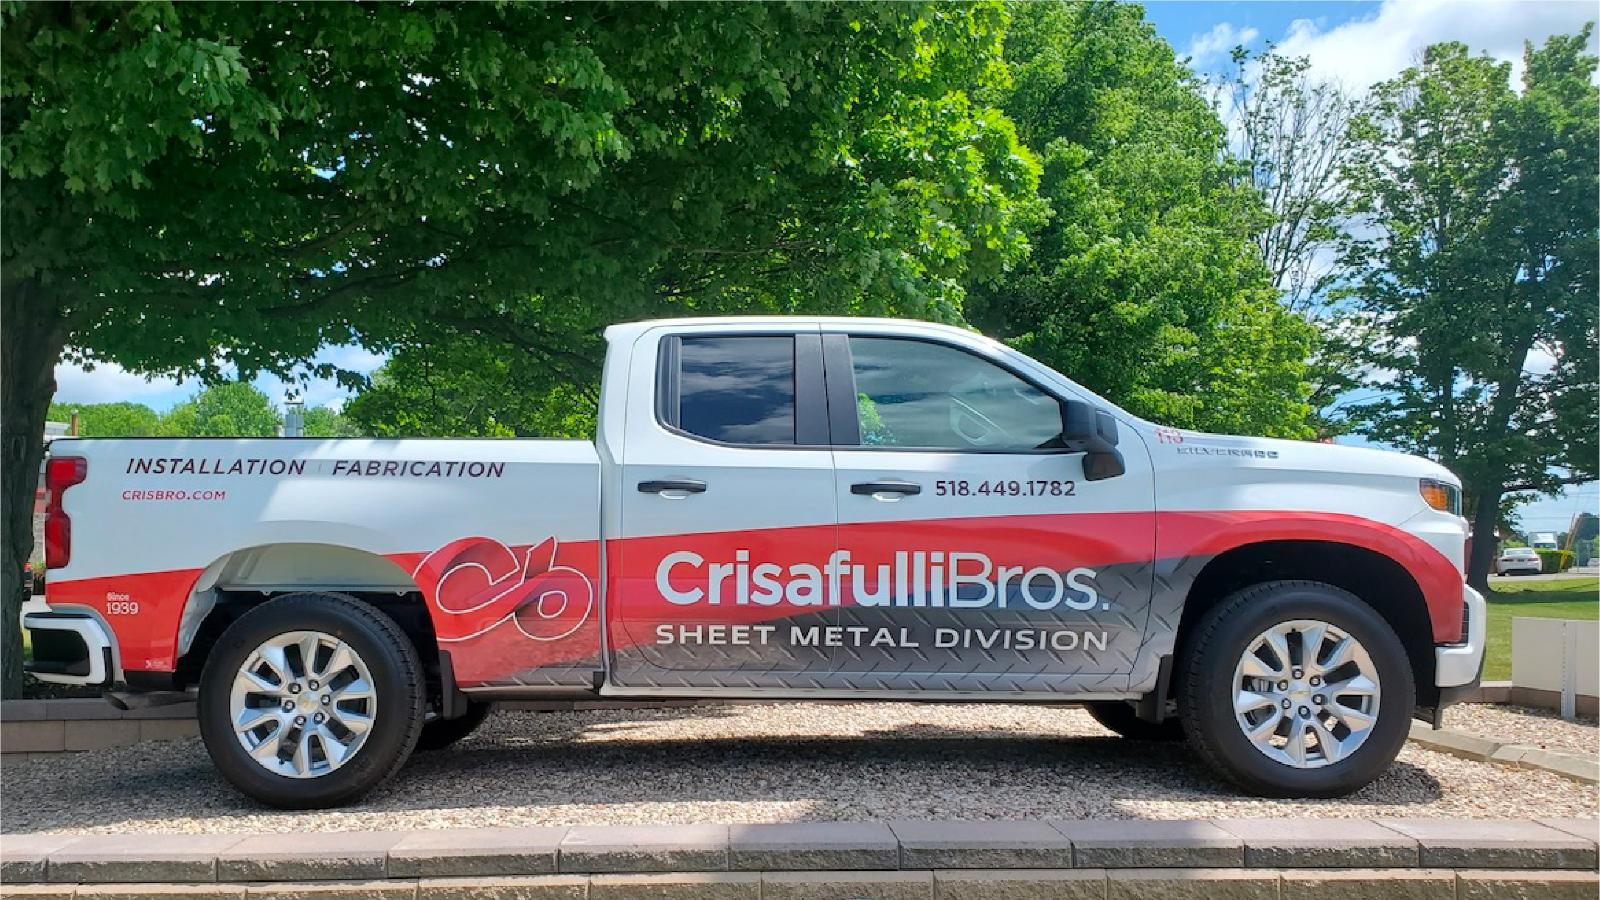 Crisafulli Bros. | Sheet Metal Division Chevy Silverado Pickup Truck Wrap